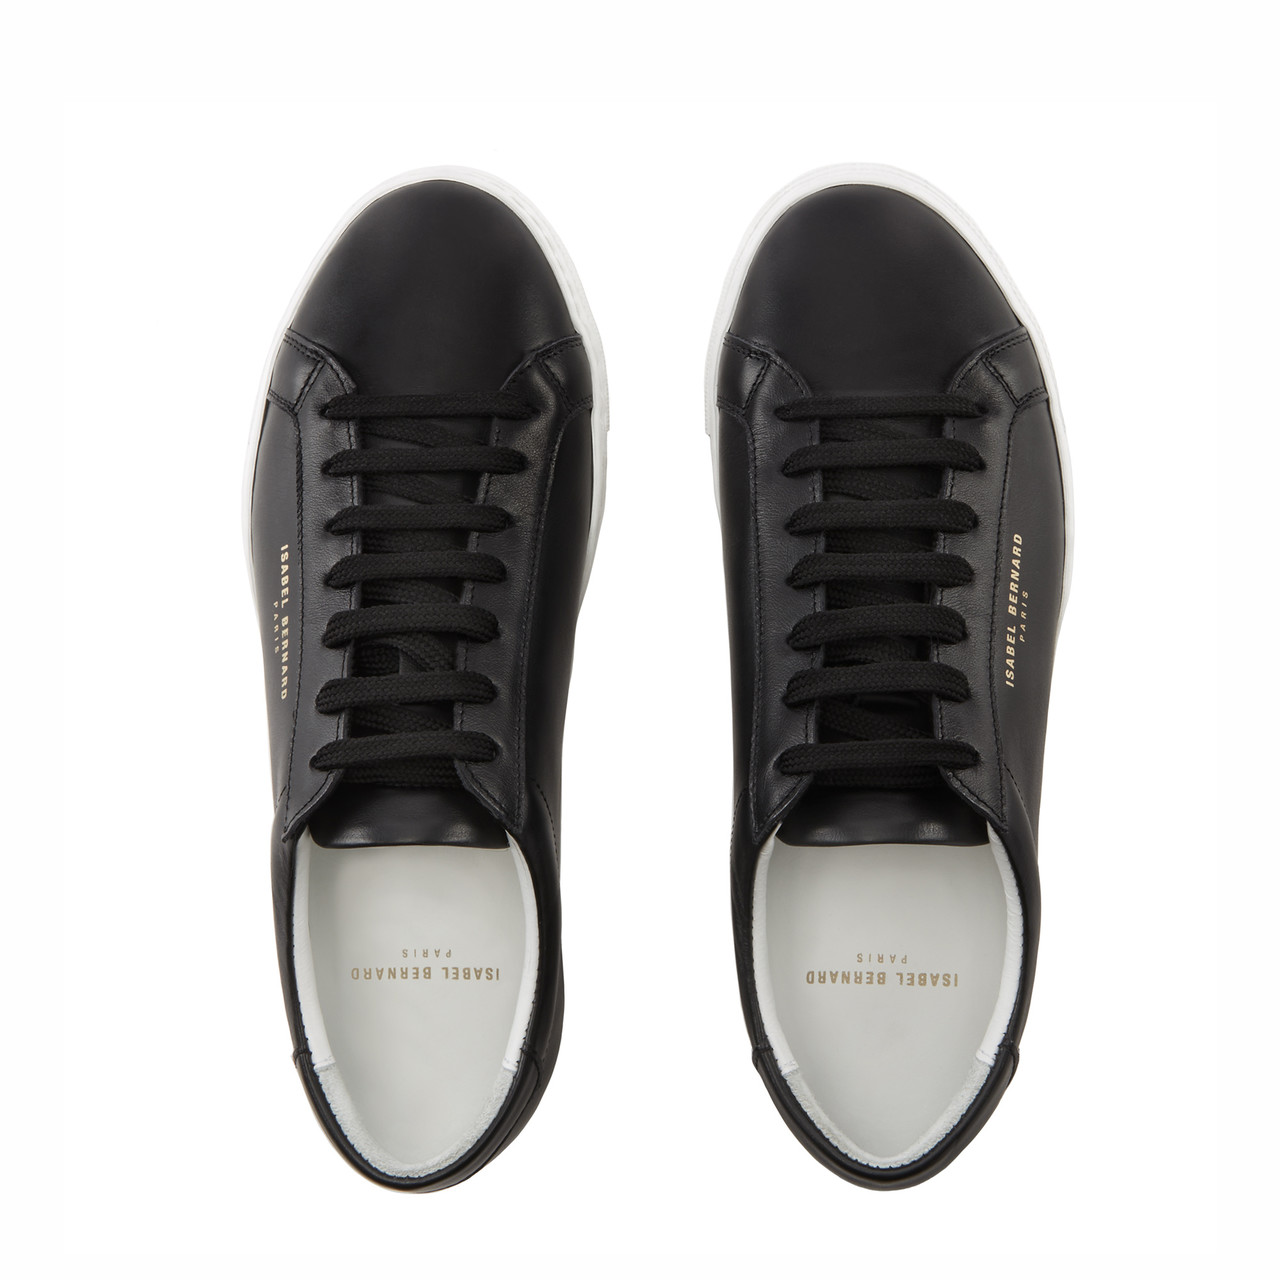 Vendôme Luce black calfskin leather sneakers